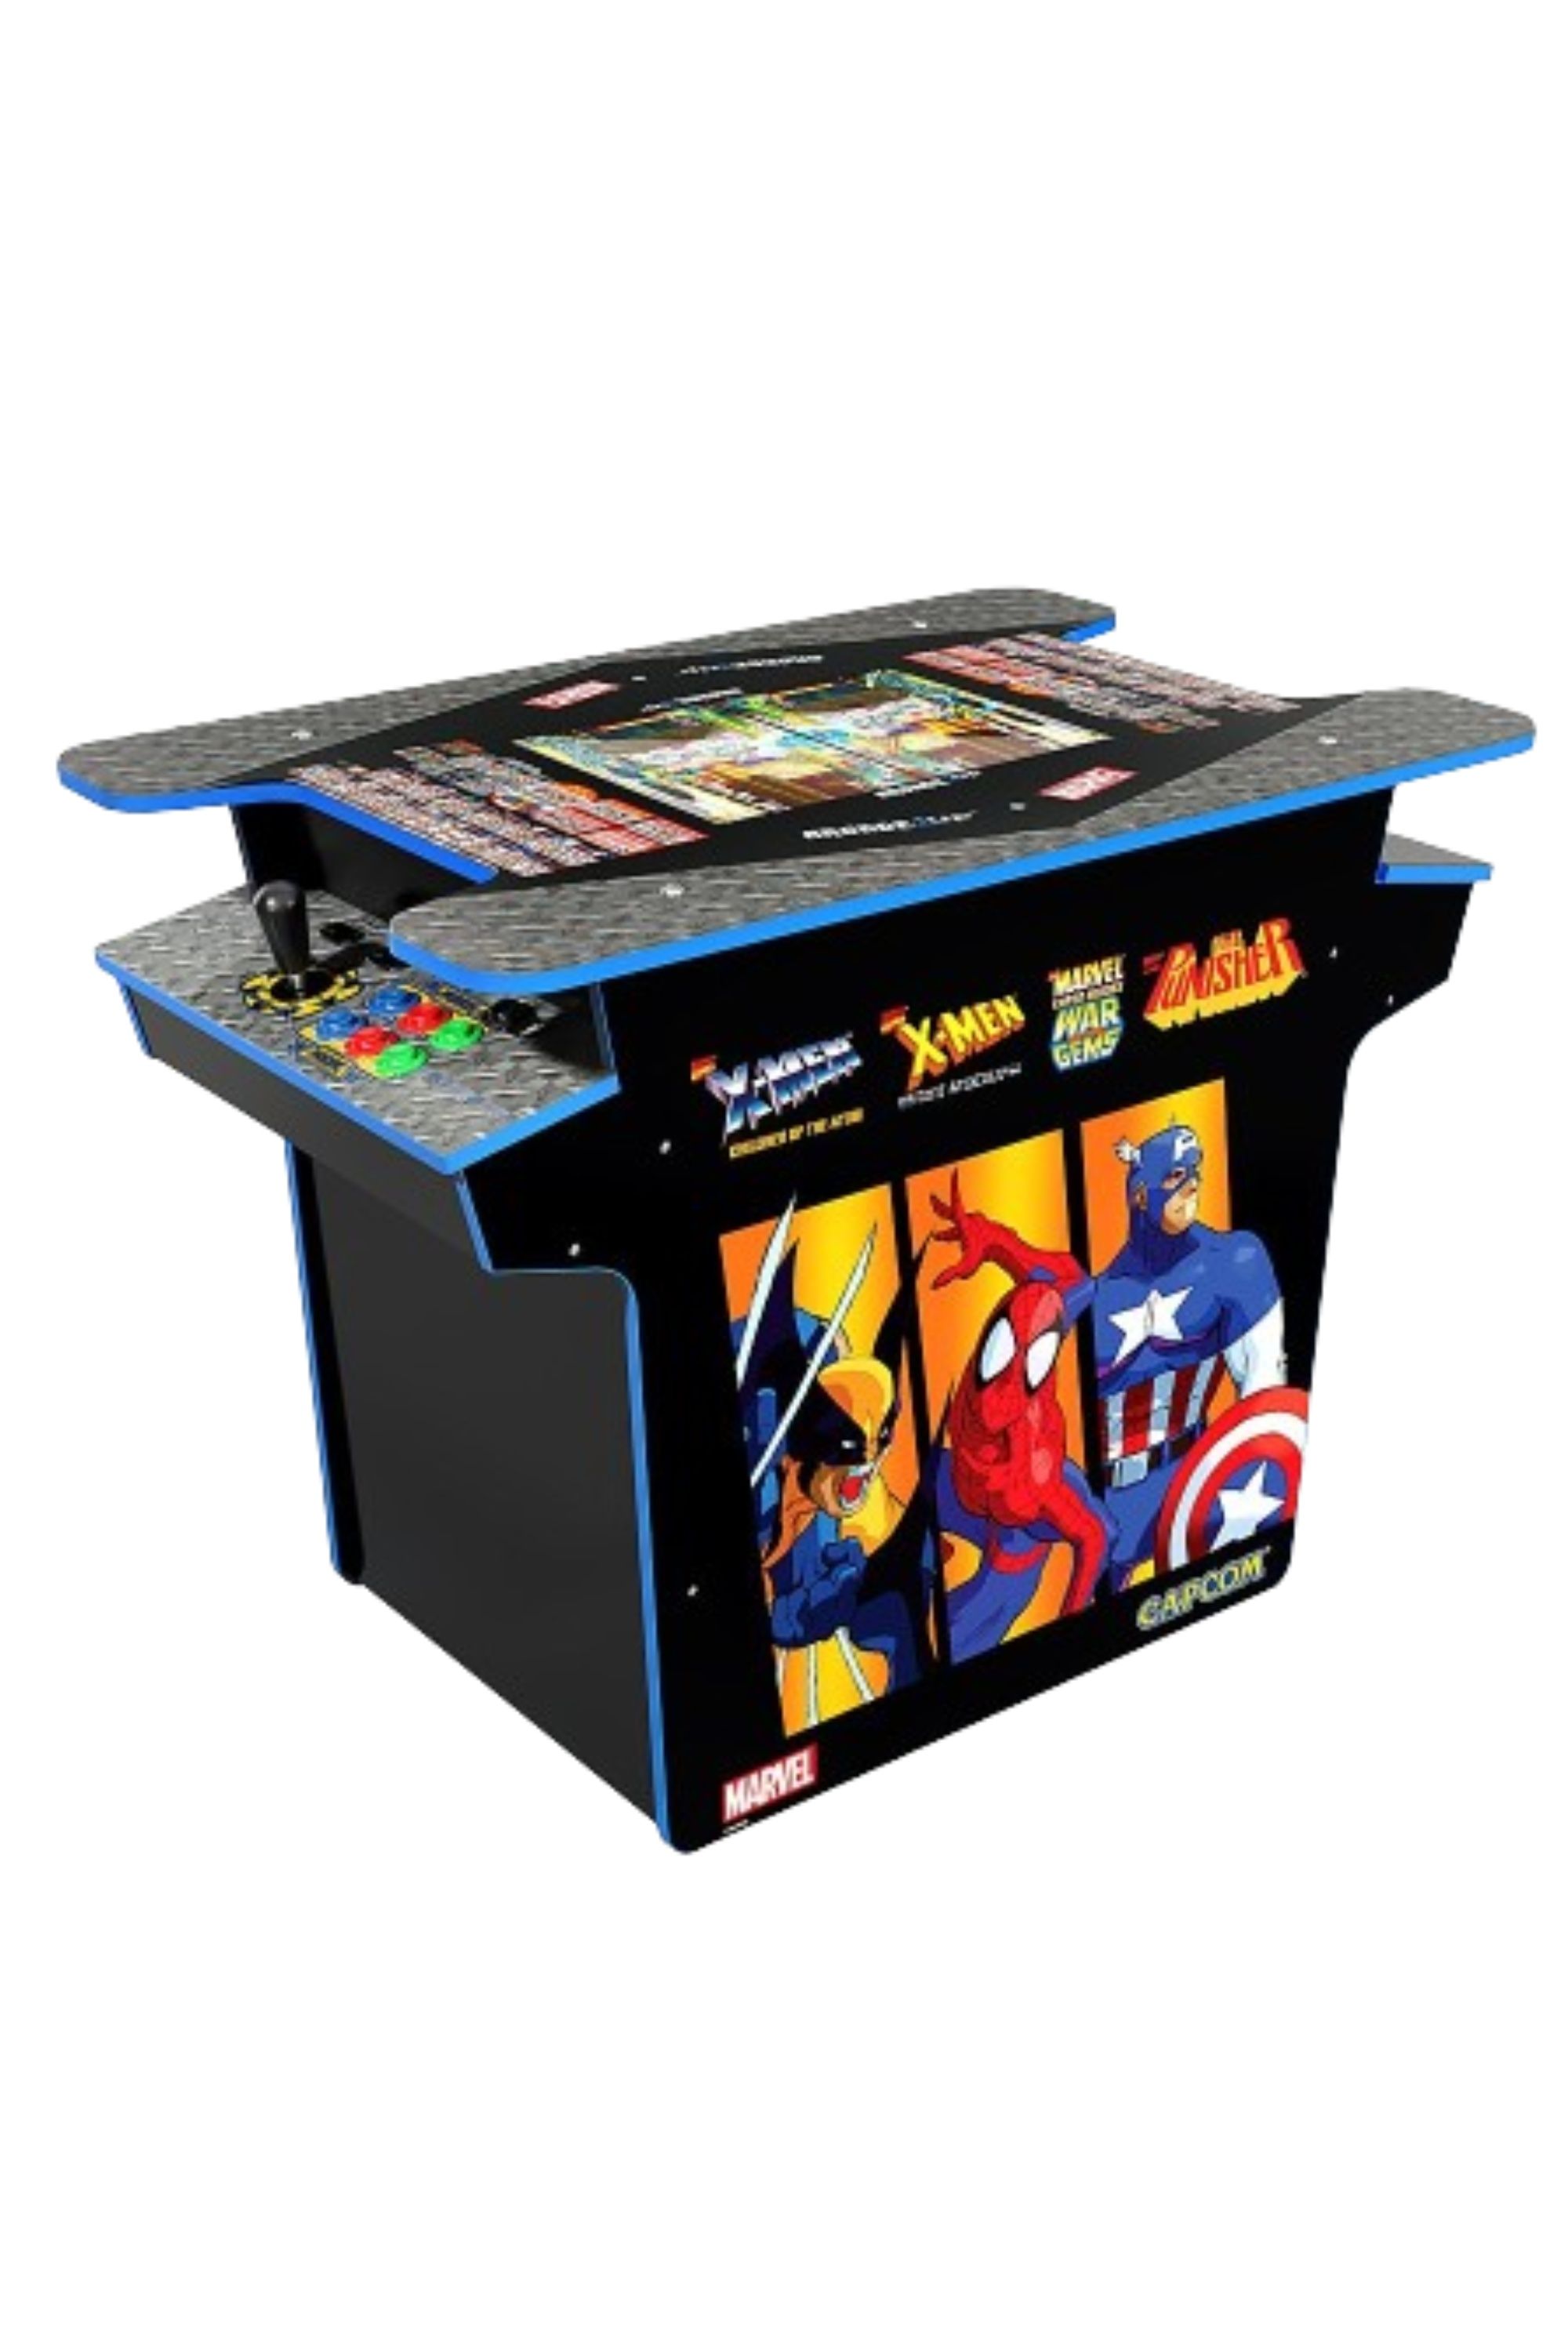 Arcade1Up - Marvel Vs Capcom Gaming Table